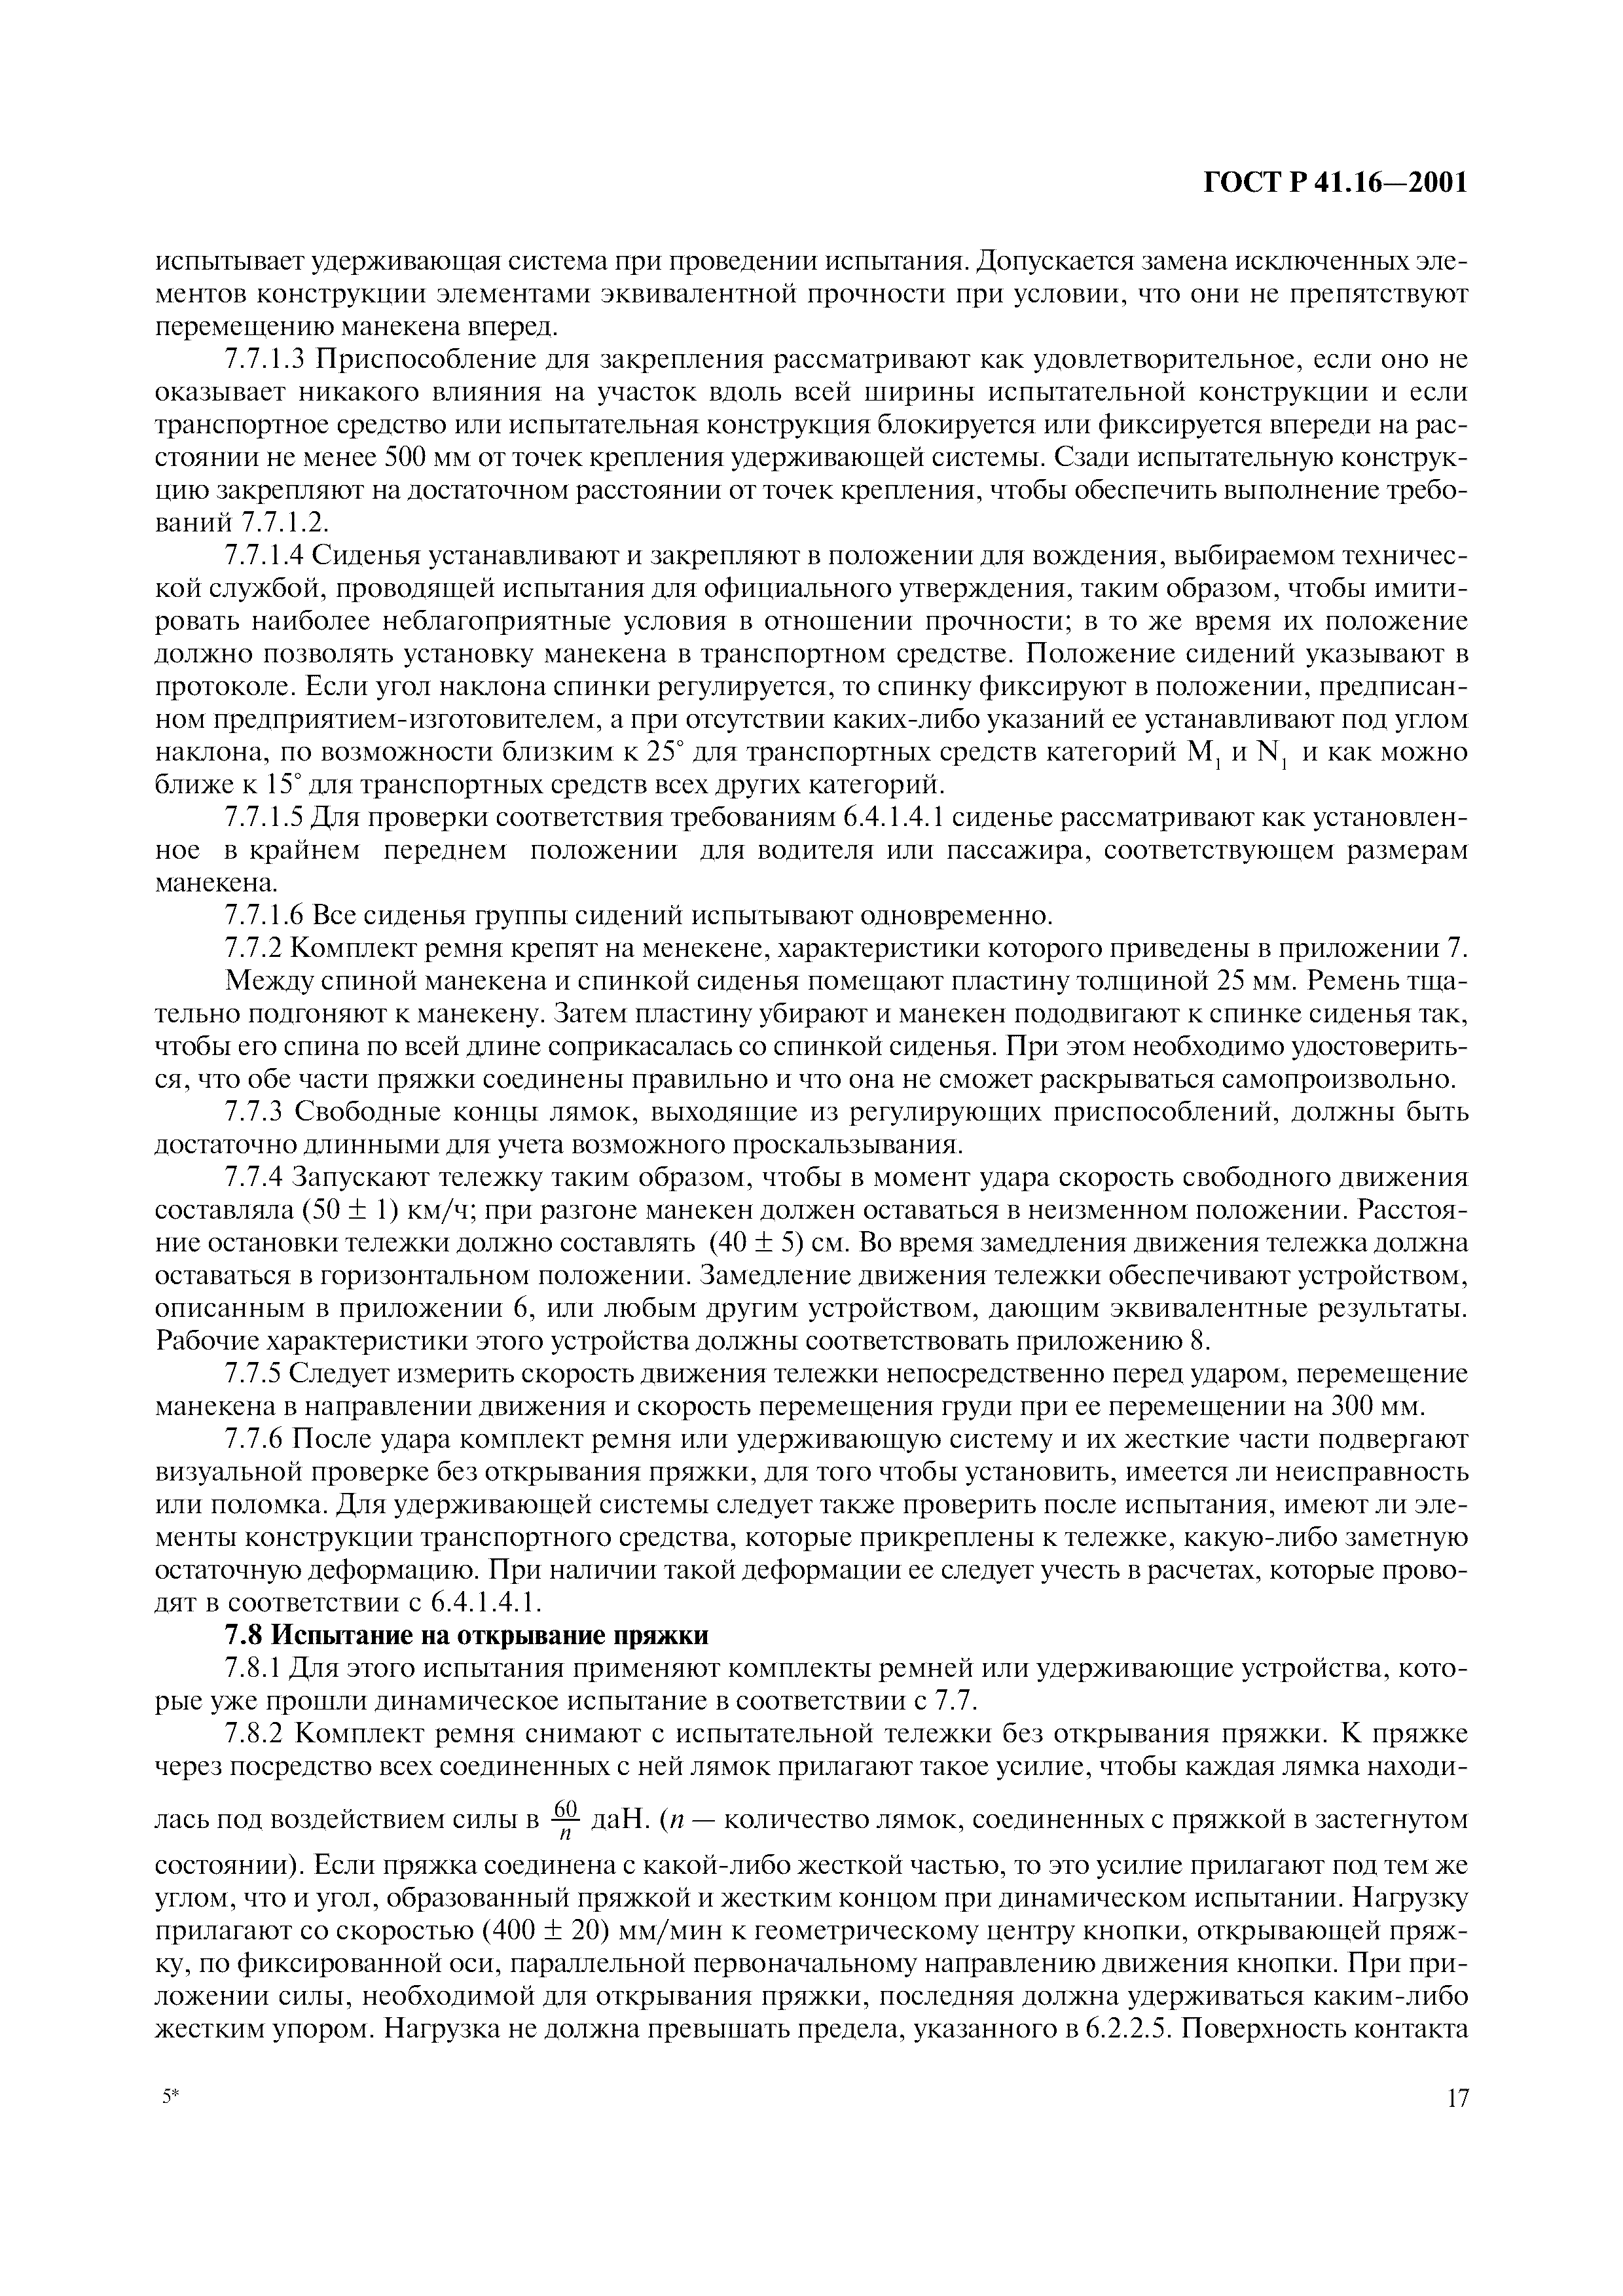 ГОСТ Р 41.16-2001. Страница 20